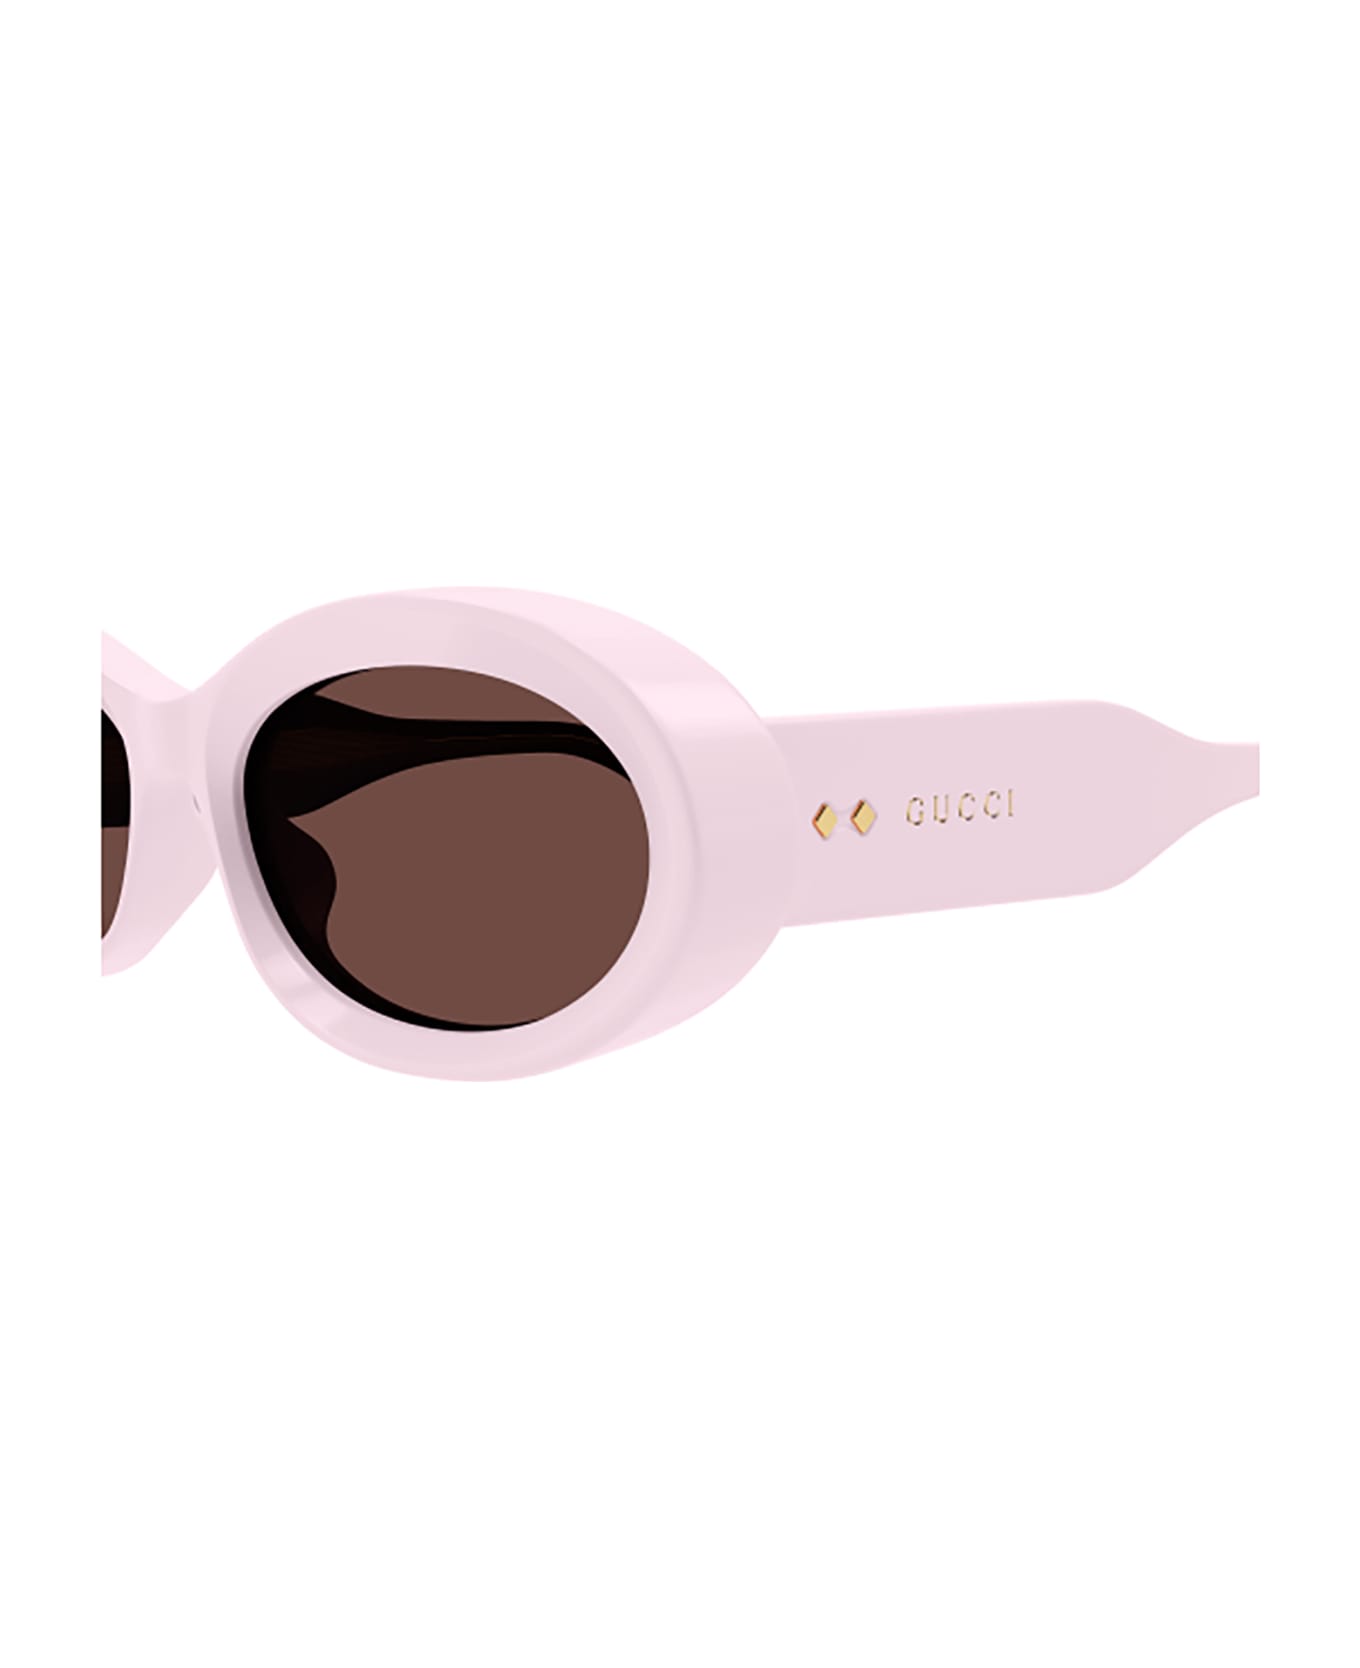 Gucci Eyewear GG1527S Sunglasses - Pink Pink Brown